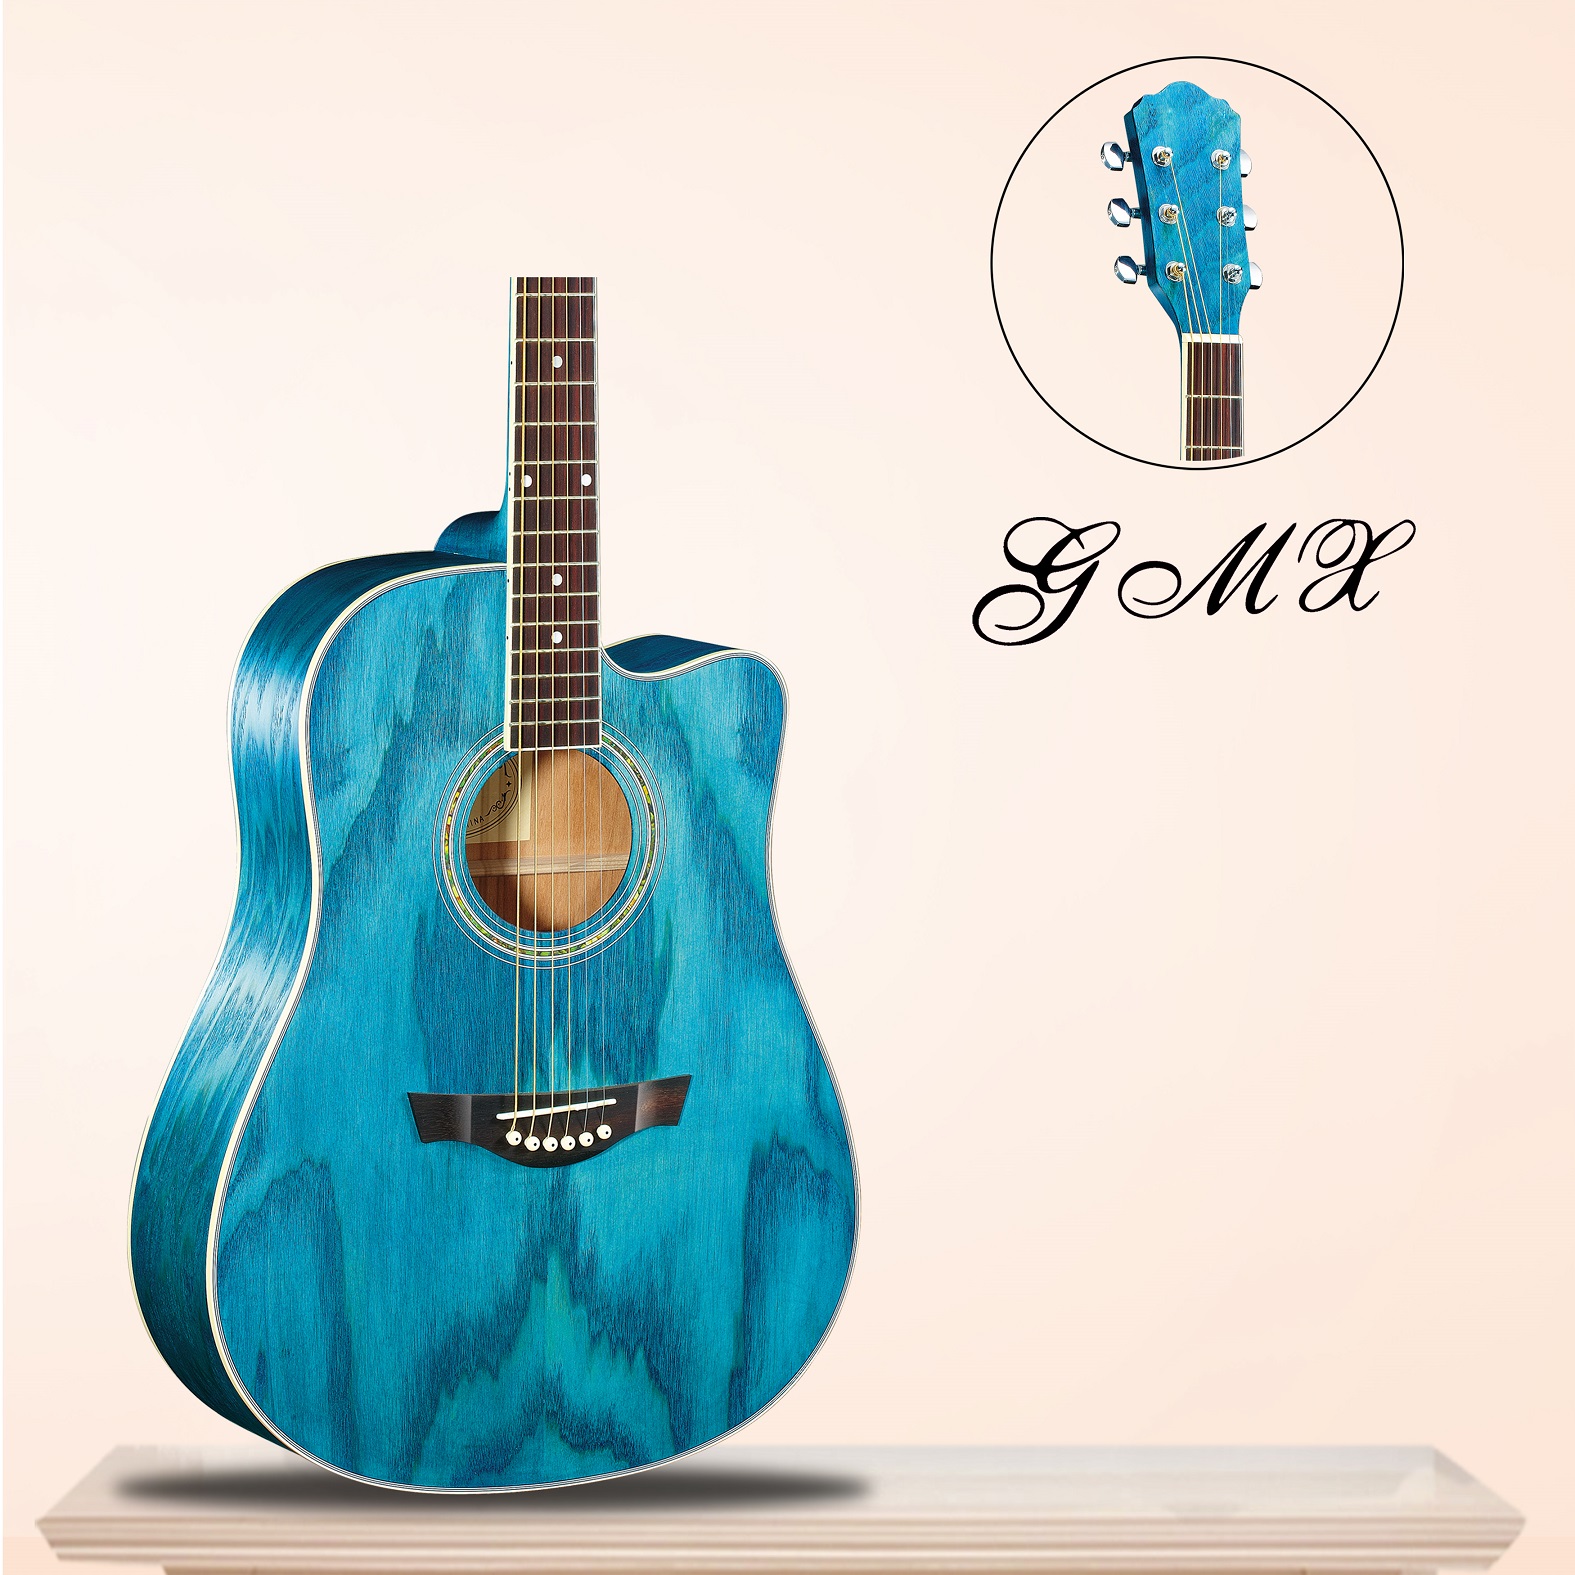 Diecast chroom hoofdmachine groothandel high end multiplex akoestische gitaar